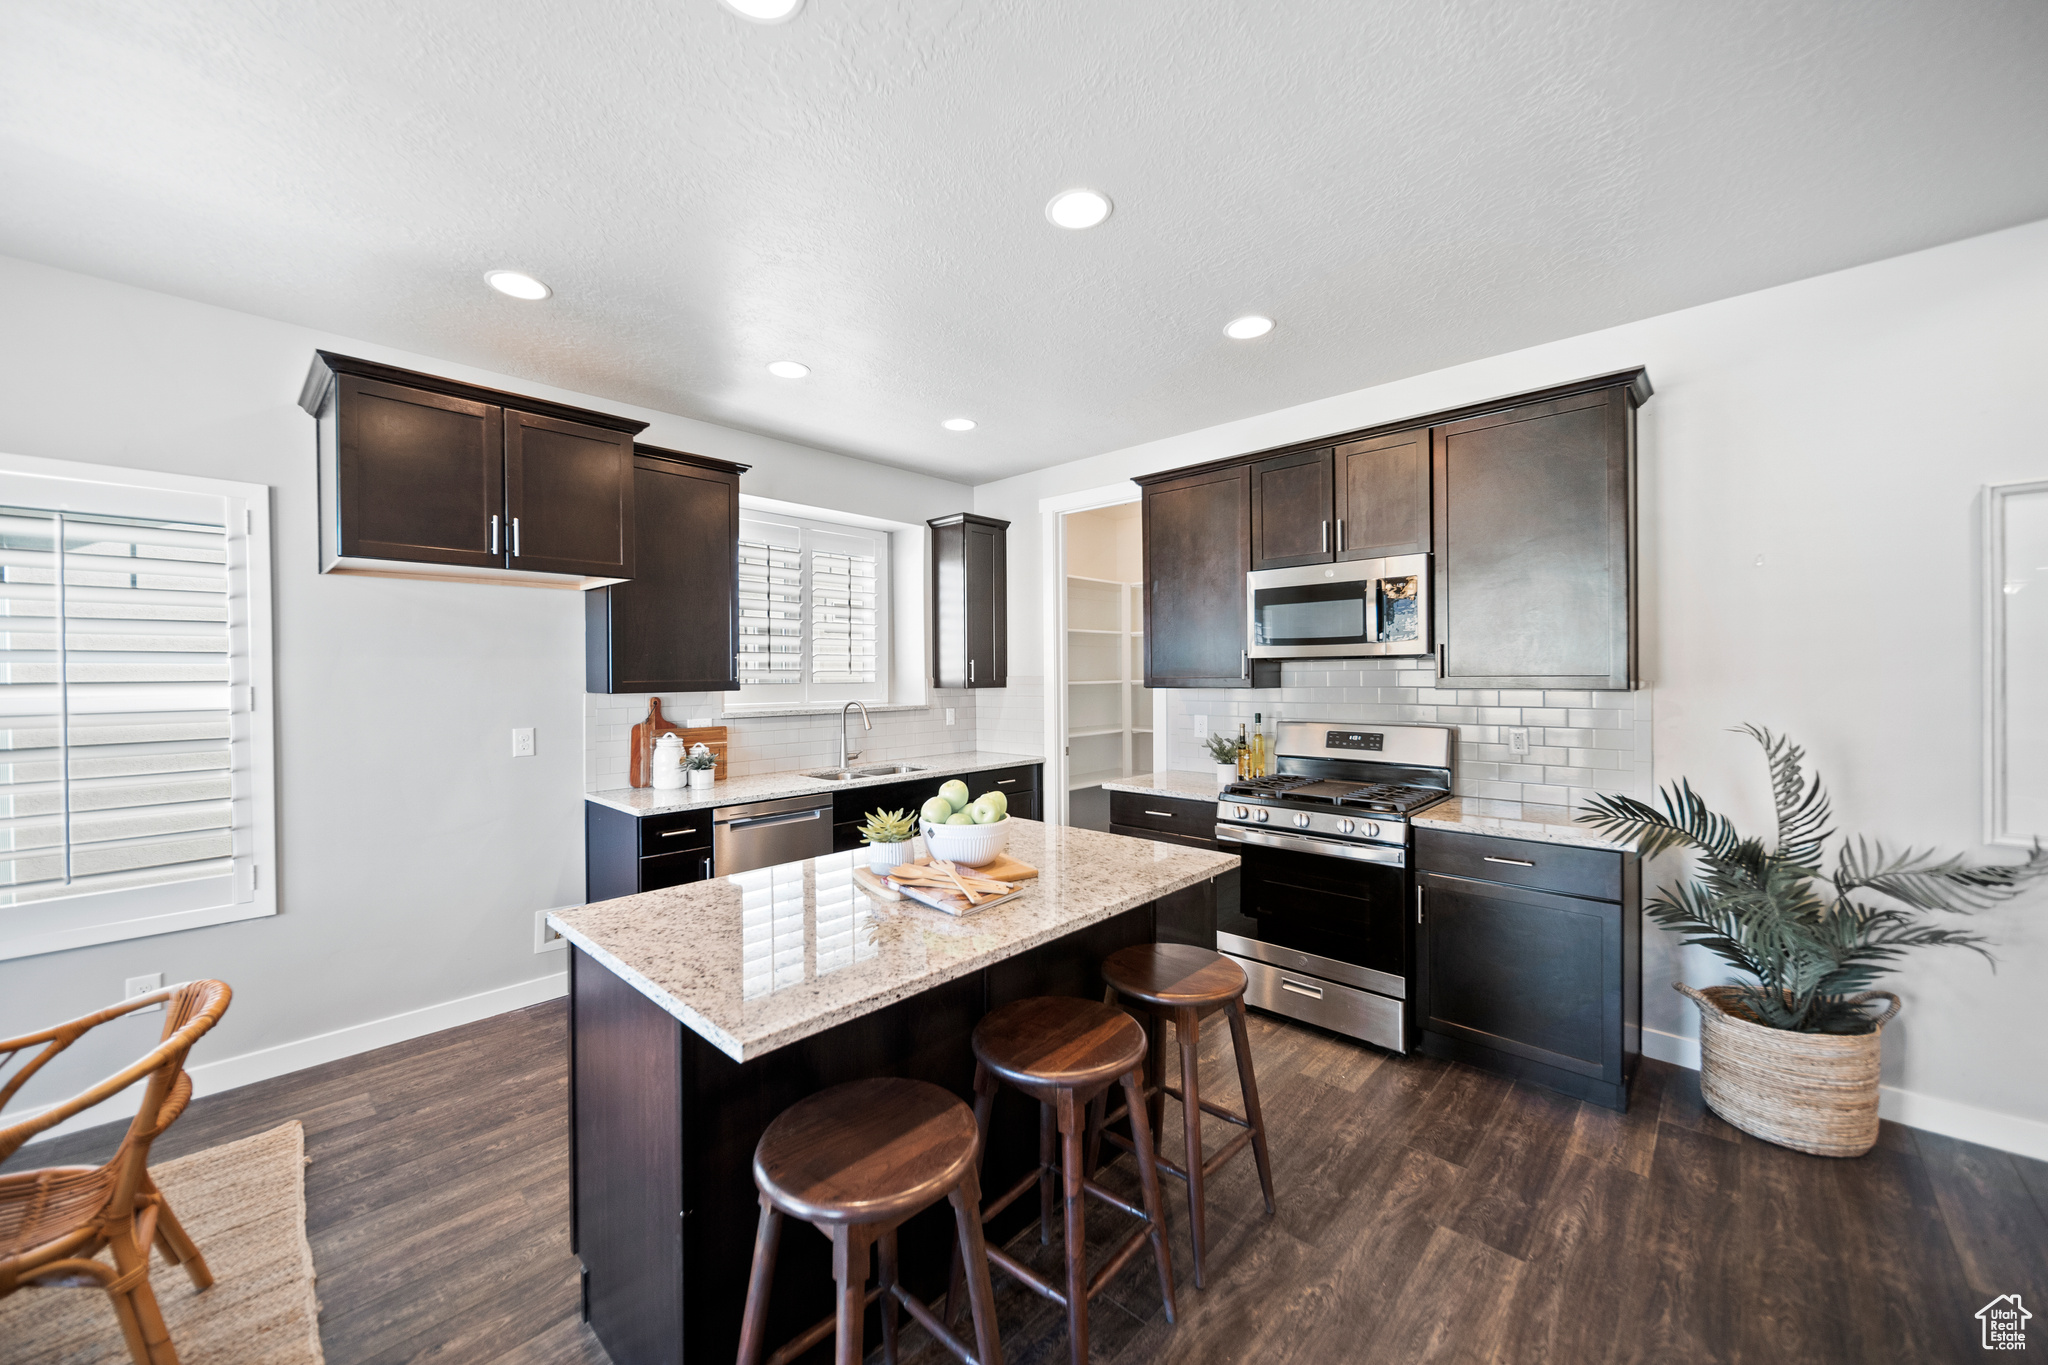 Kitchen featuring a center island, backsplash, a breakfast bar area, dark wood-type flooring, and stainless steel appliances